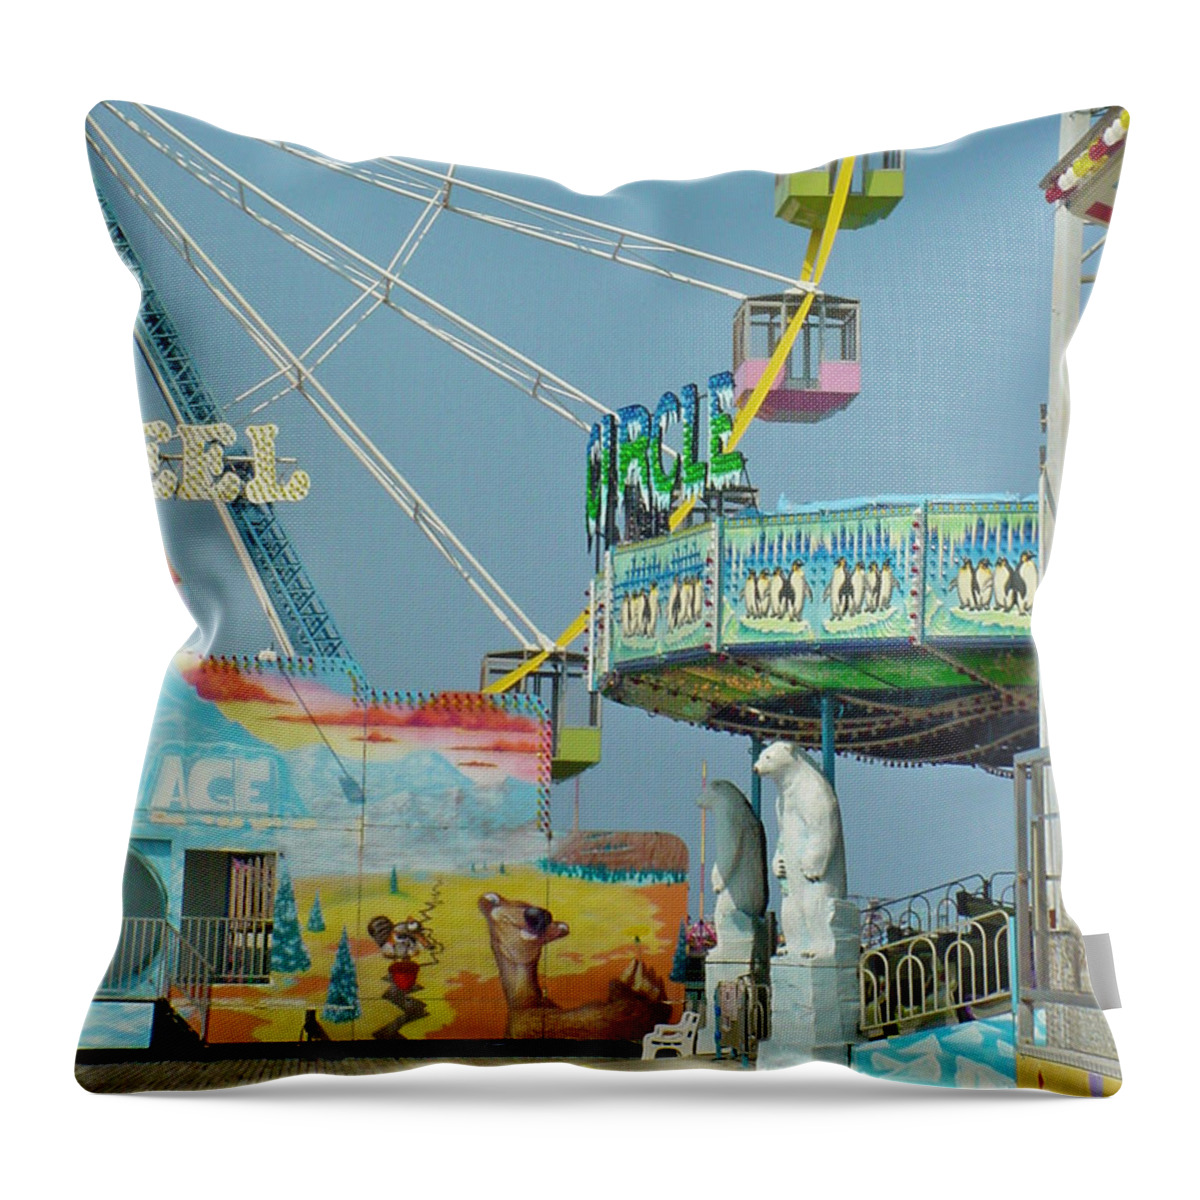 Landscape Throw Pillow featuring the photograph Seaside Funtown Ferris Wheel by Lyric Lucas